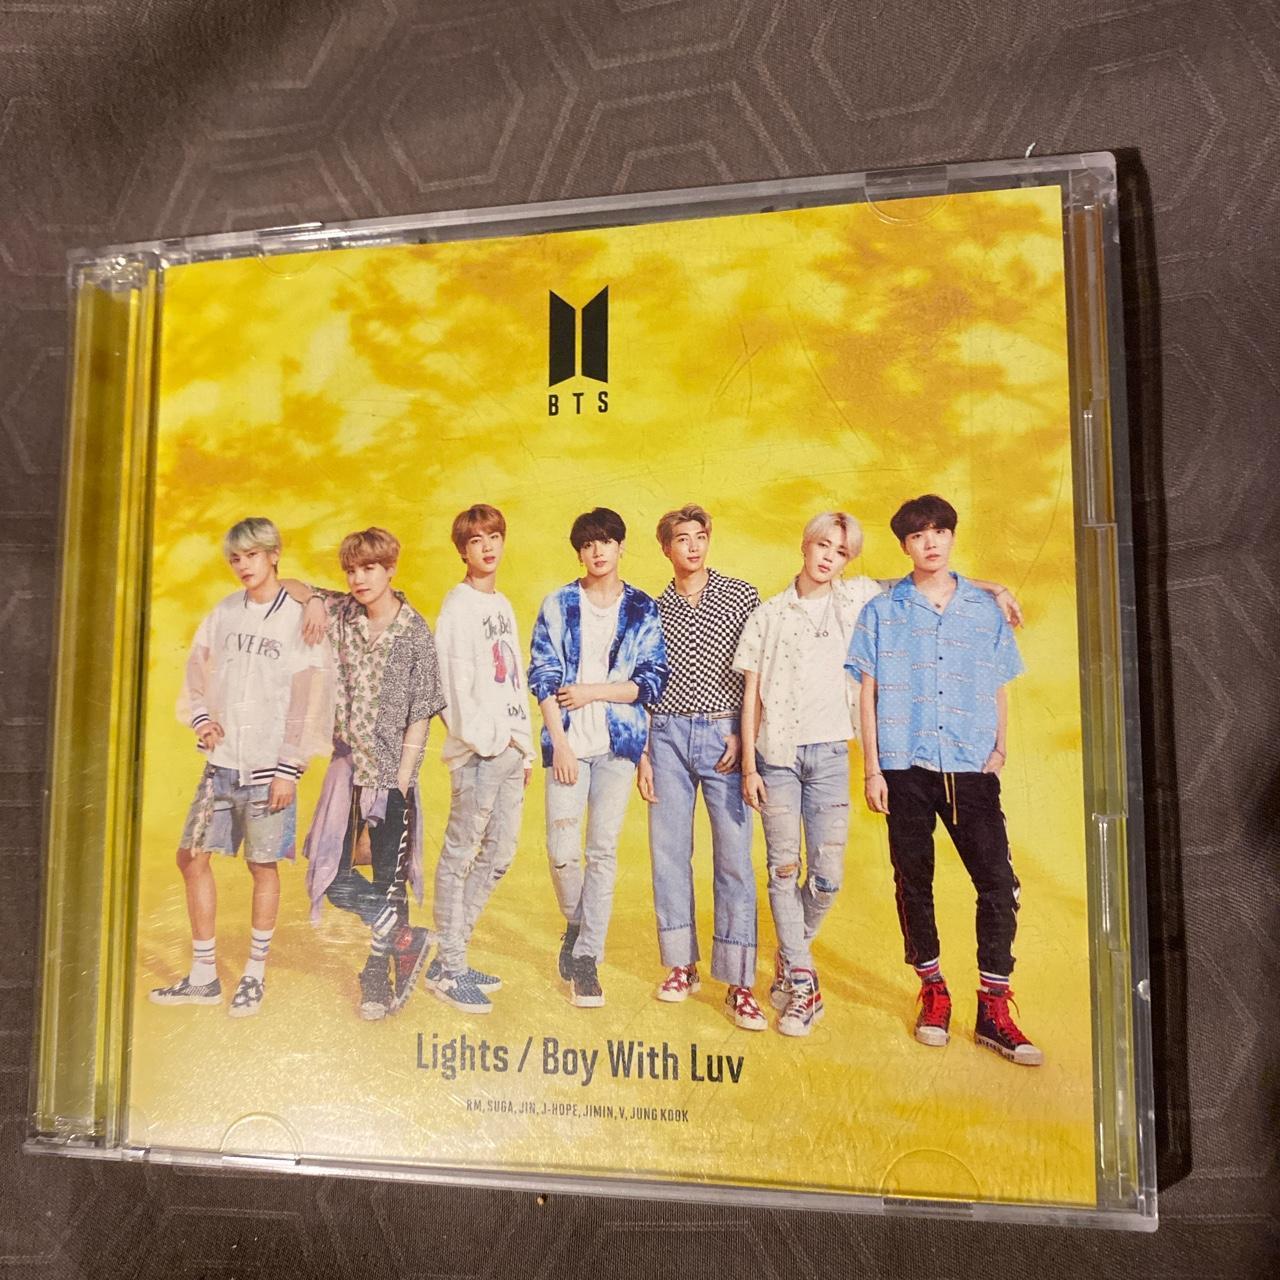 BTS LIGHTS/BOY WITH LUV JAPANESE ALBUM, no photo card